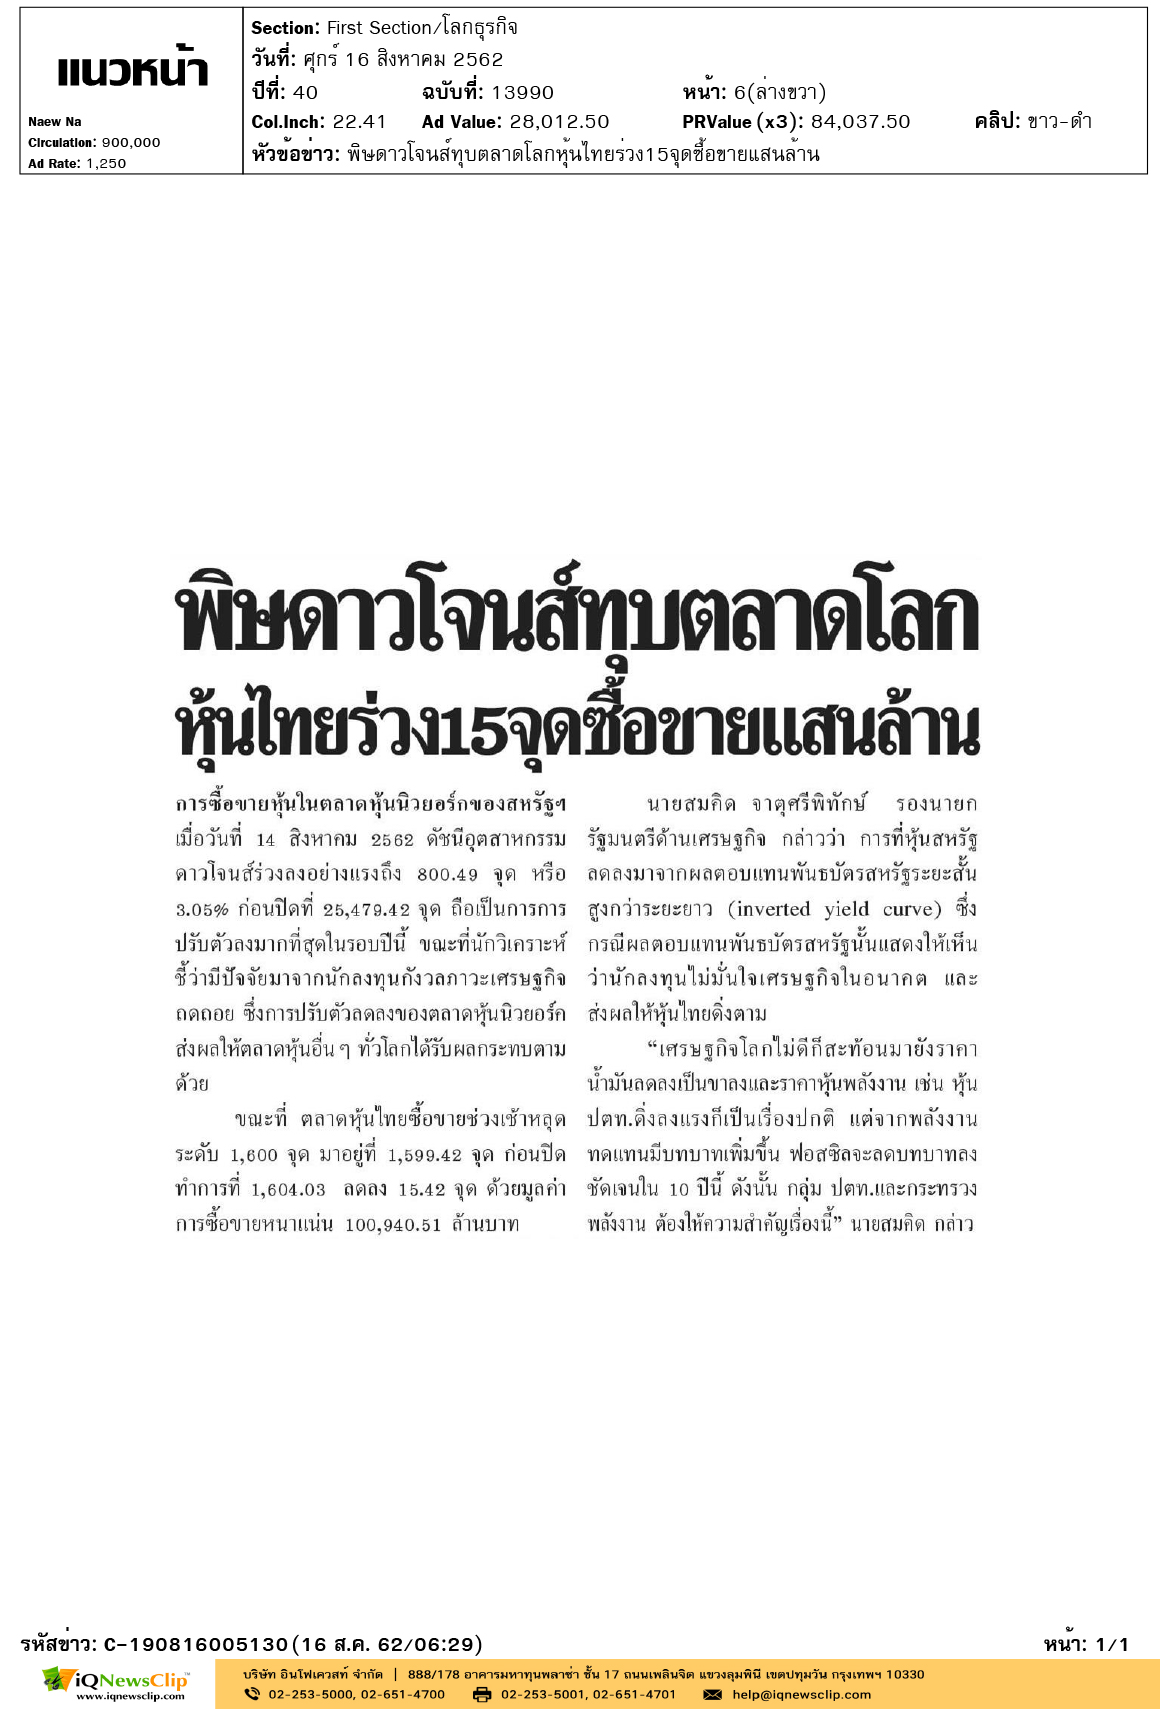 Other-แนวหน้า-พิษดาวโจนส์ทุบตลาดโลกหุ้นไทยร่วง15จุดซื้อขายแสนล้าน